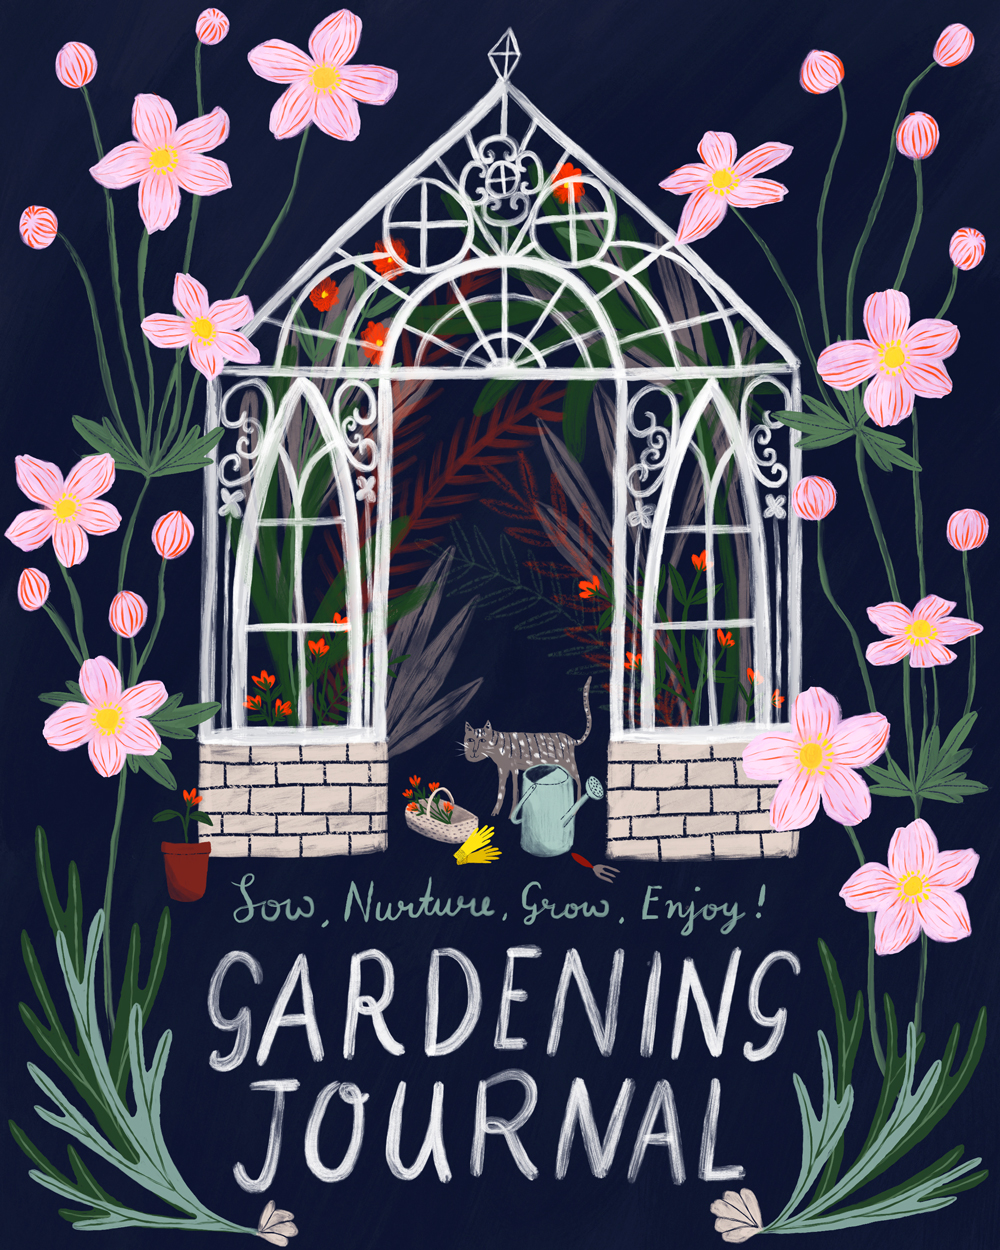 “Enjoy Gardening” Journal Cover Design · Lee Foster-Wilson